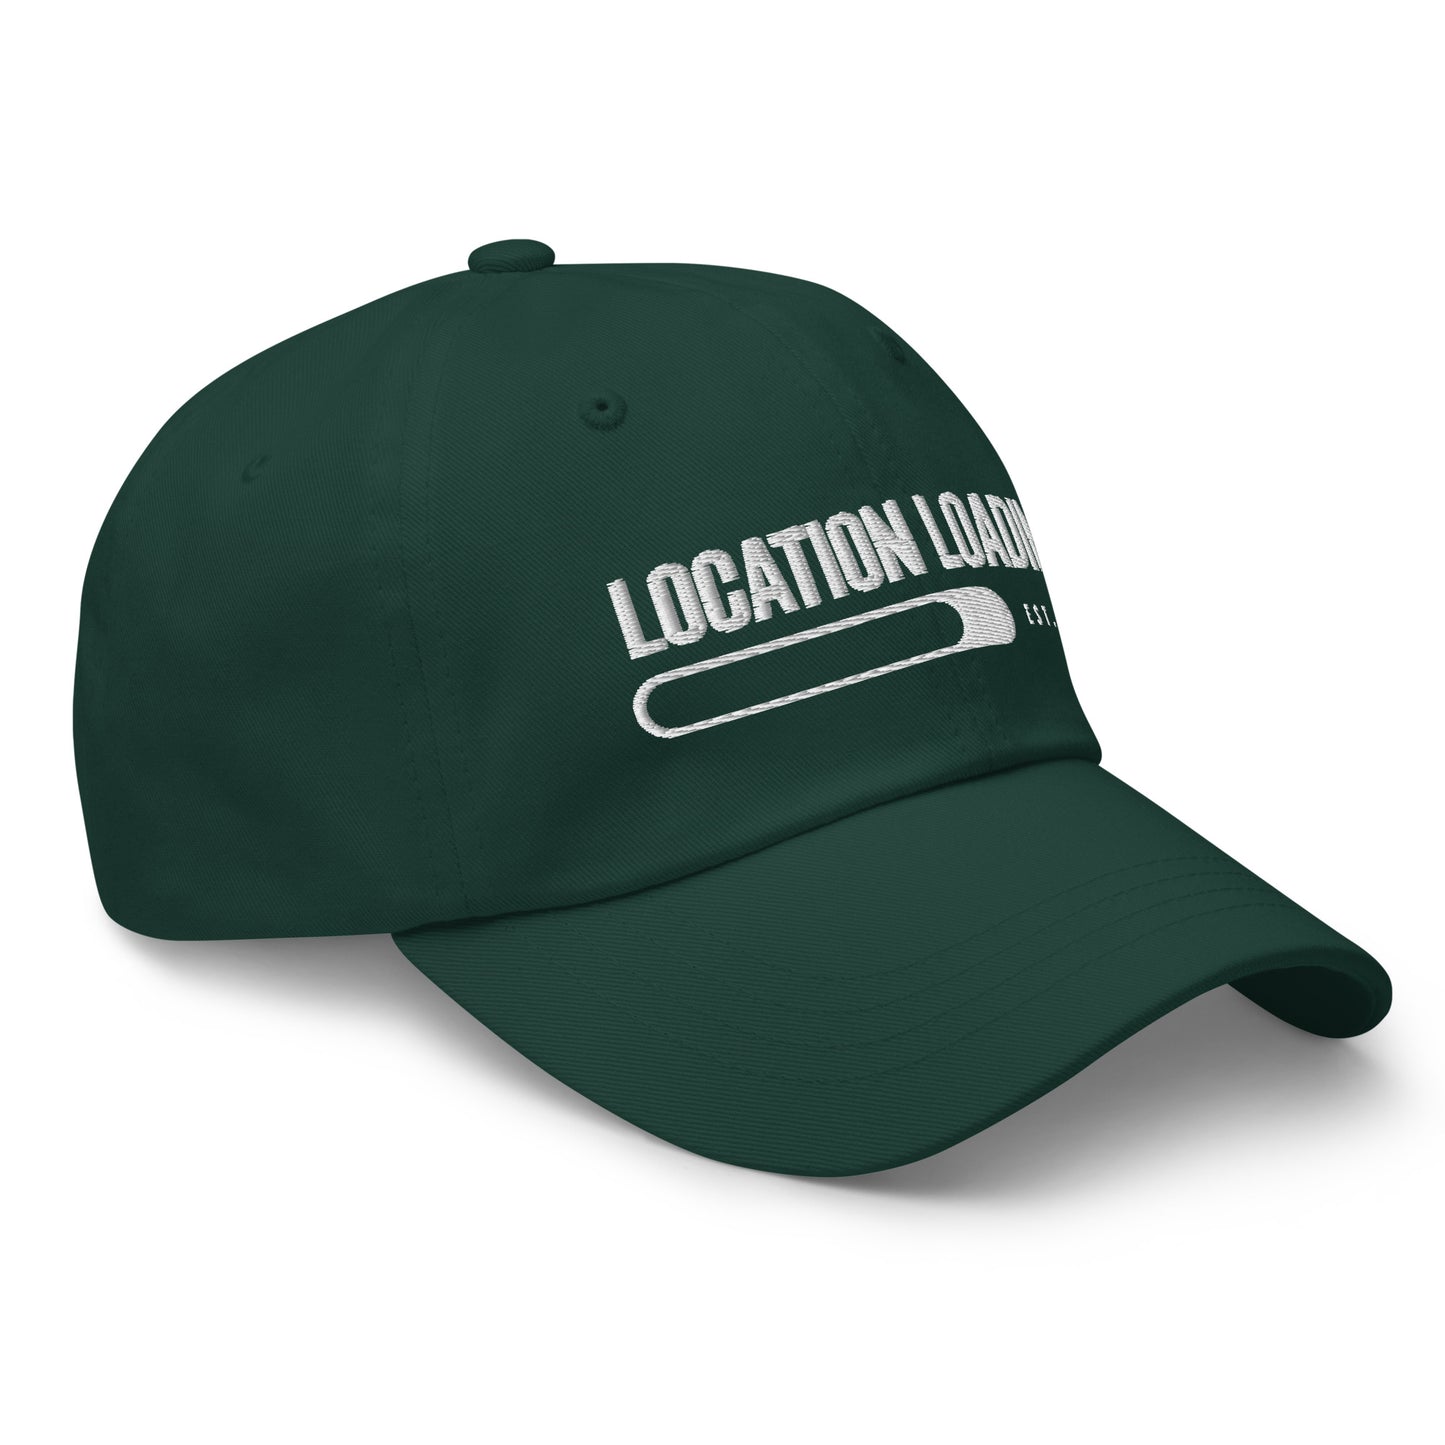 Location Loading Dad hat